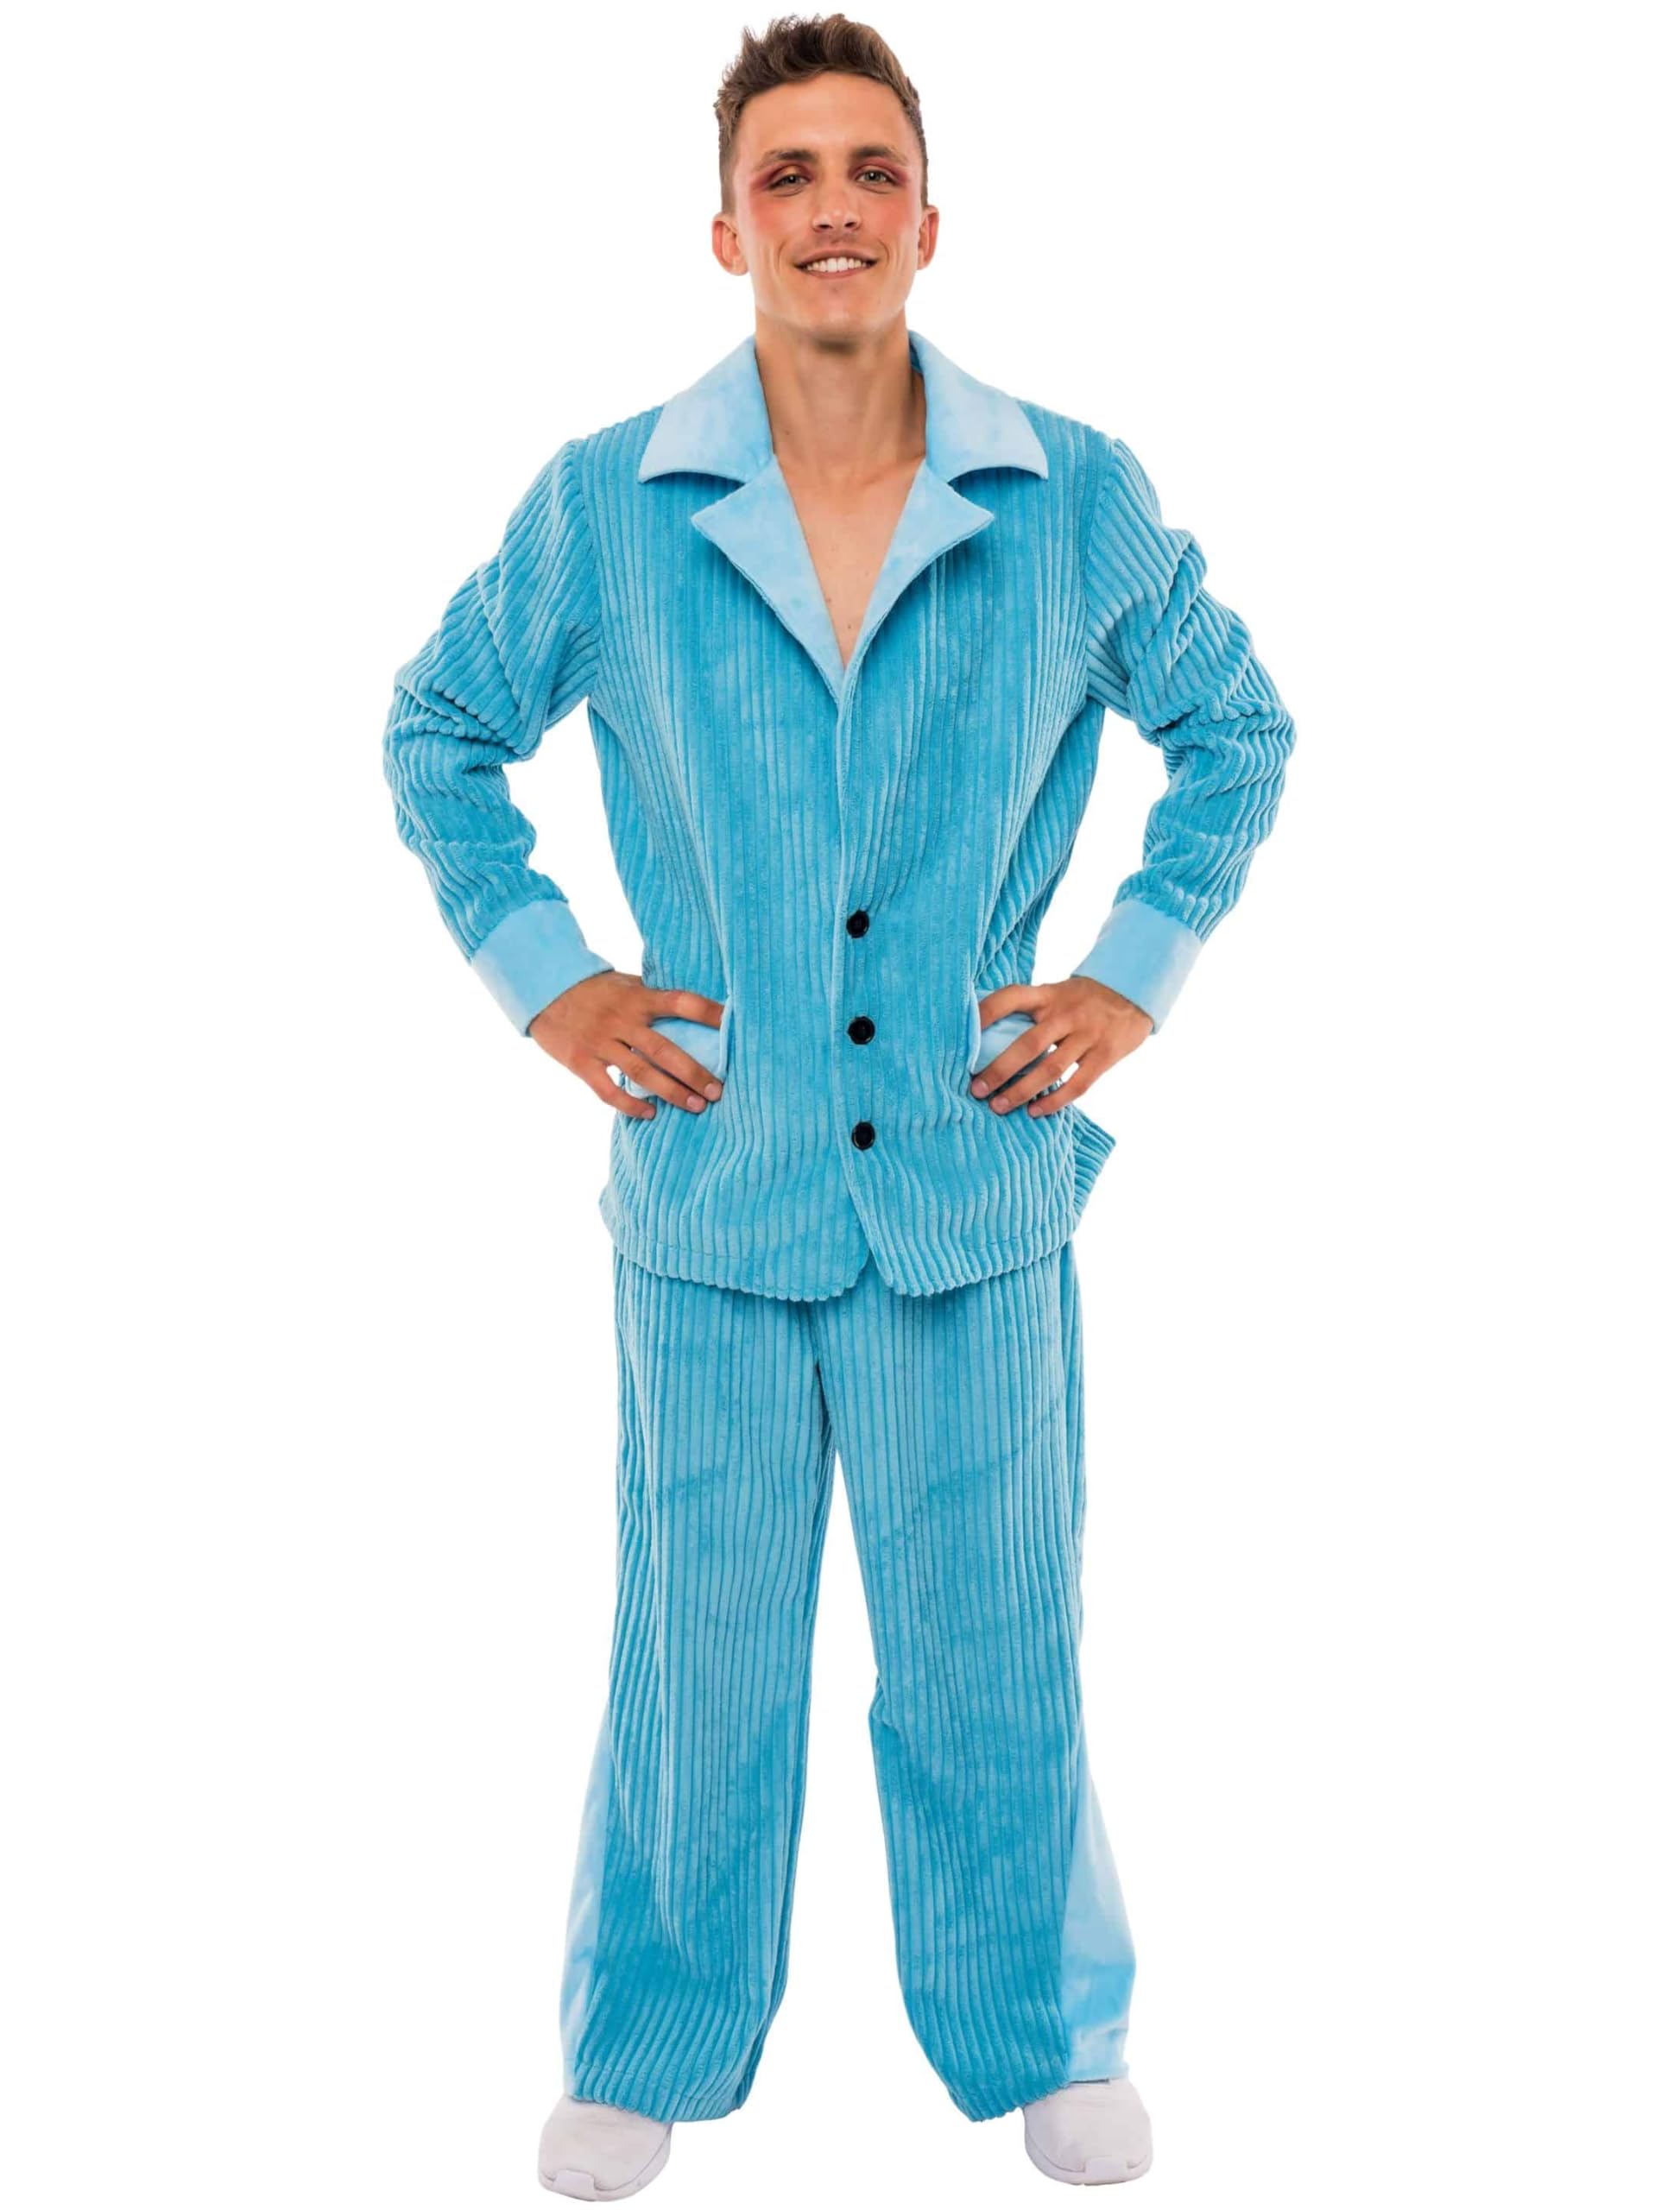 Deiters Anzug in Cord-Optik Herren blau 4XL/5XL